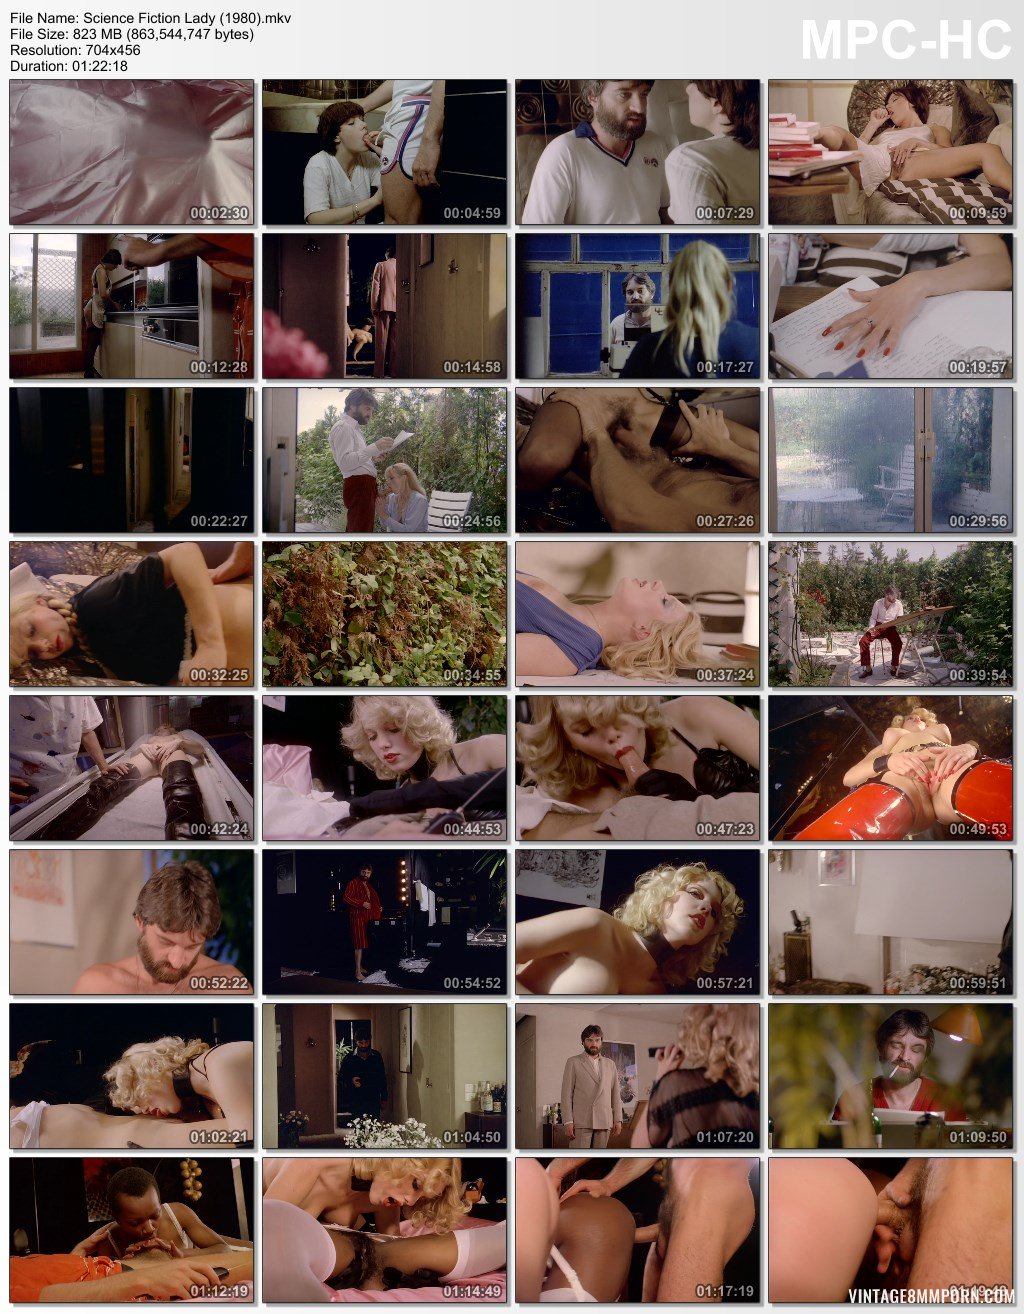 Vintage Science - Science Fiction Lady (1980) Â» Vintage 8mm Porn, 8mm Sex Films, Classic Porn,  Stag Movies, Glamour Films, Silent loops, Reel Porn